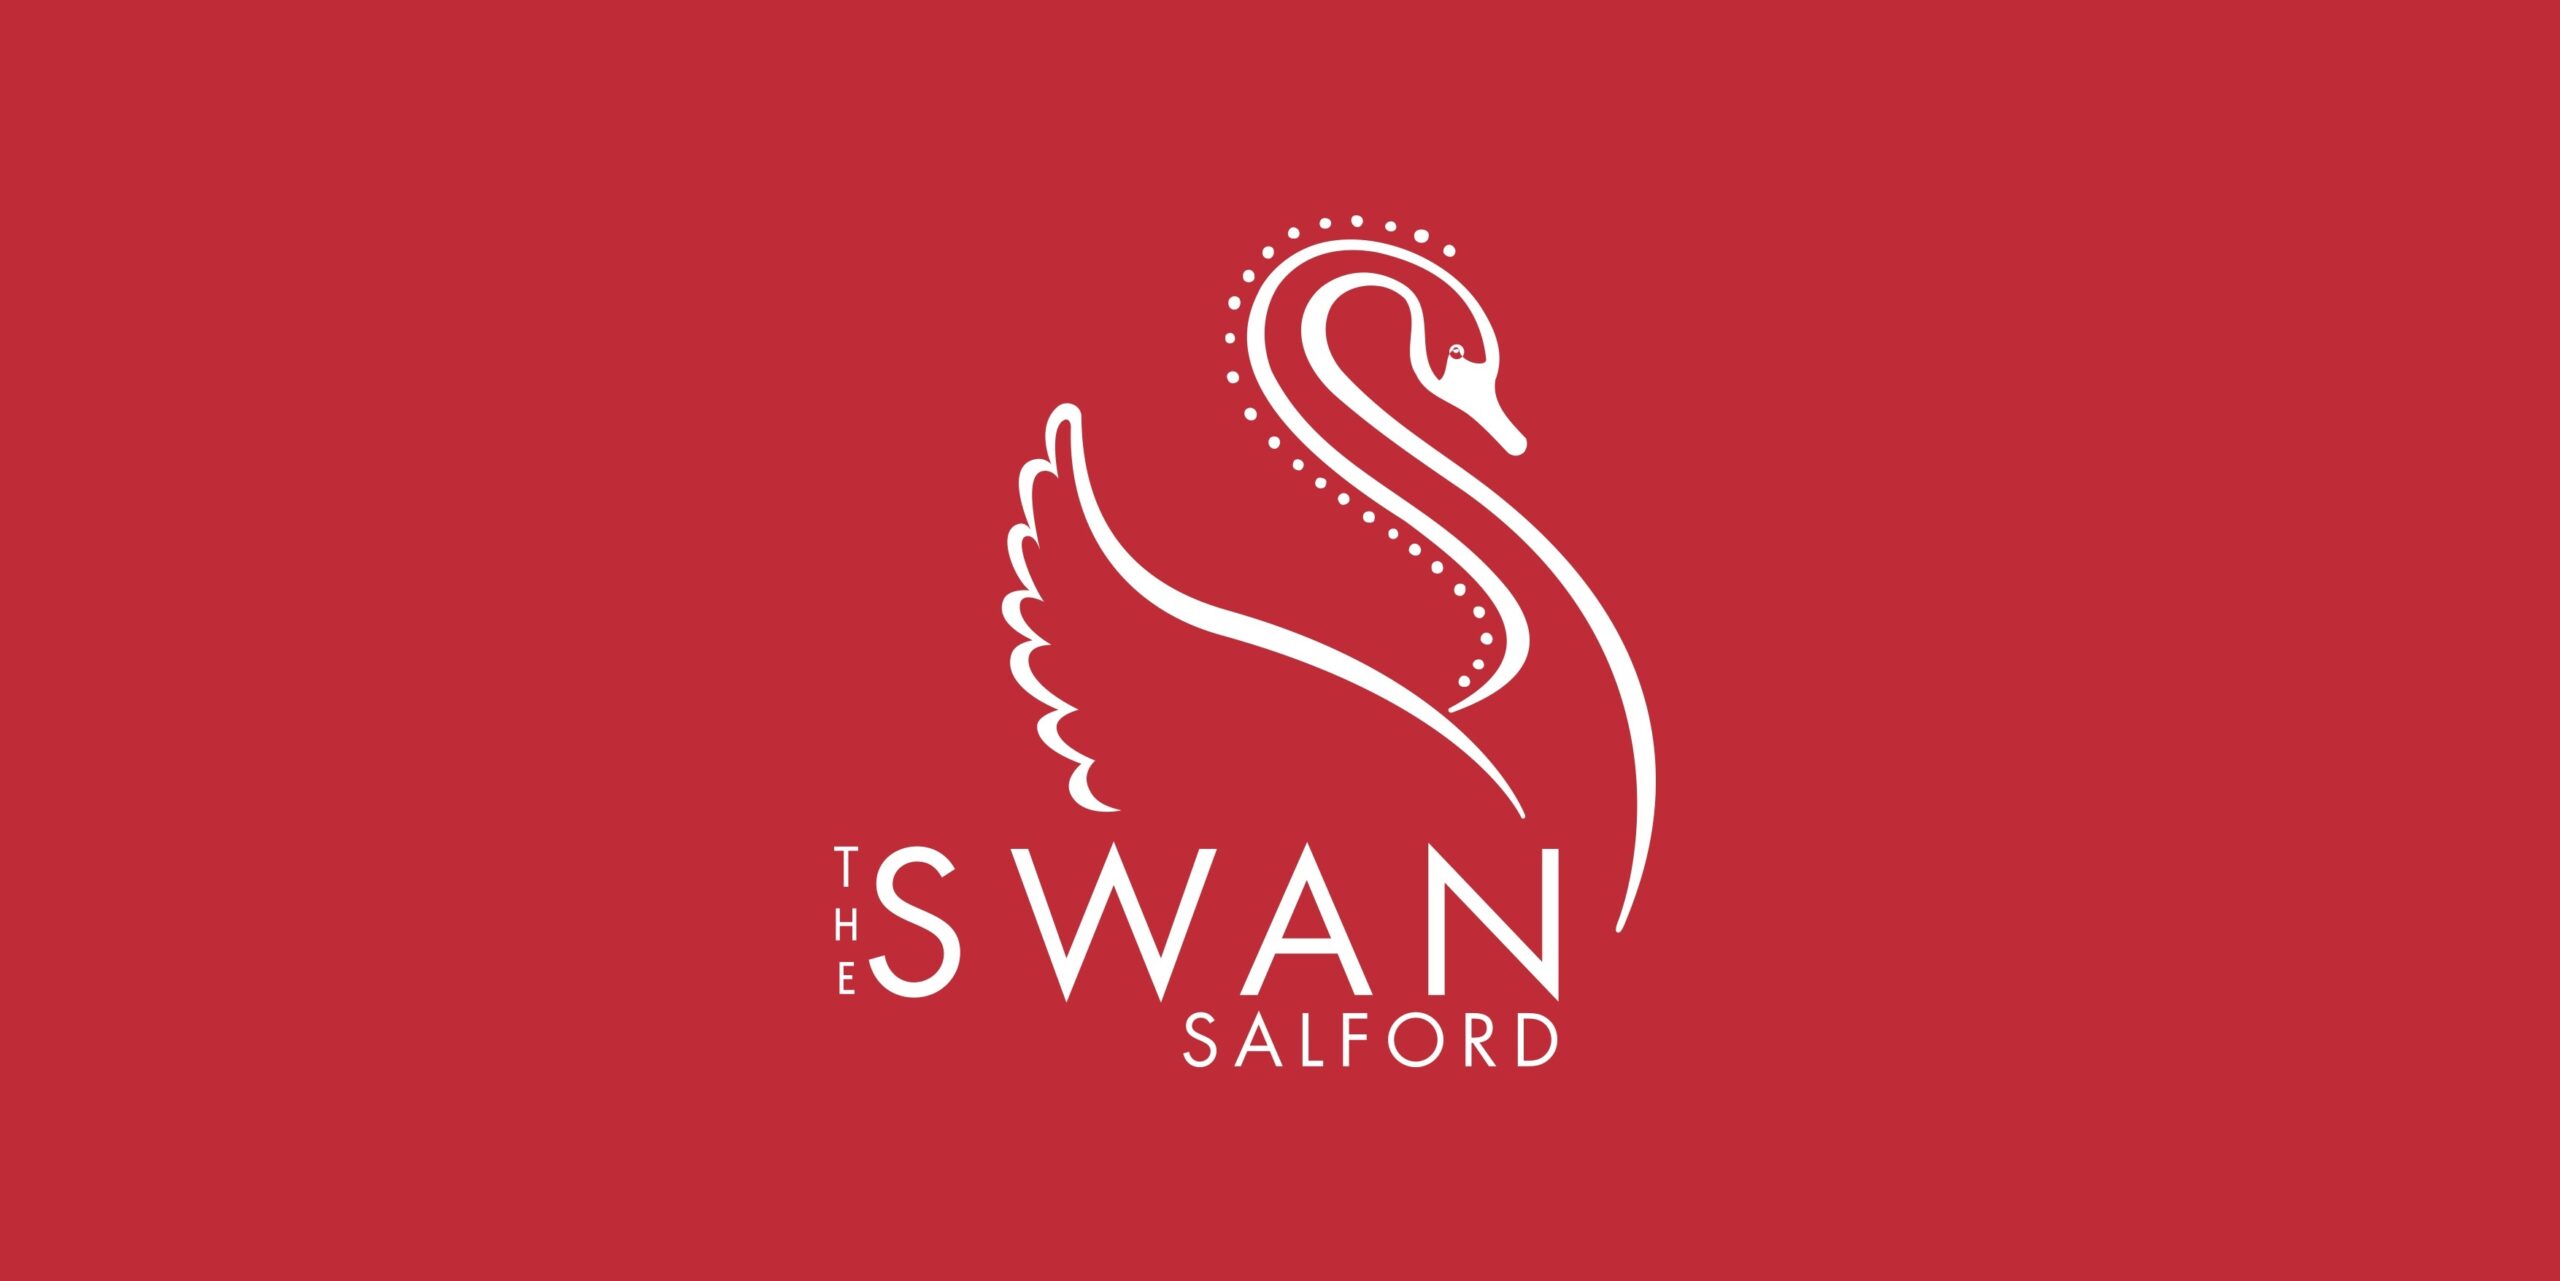 The Swan Pub Branding